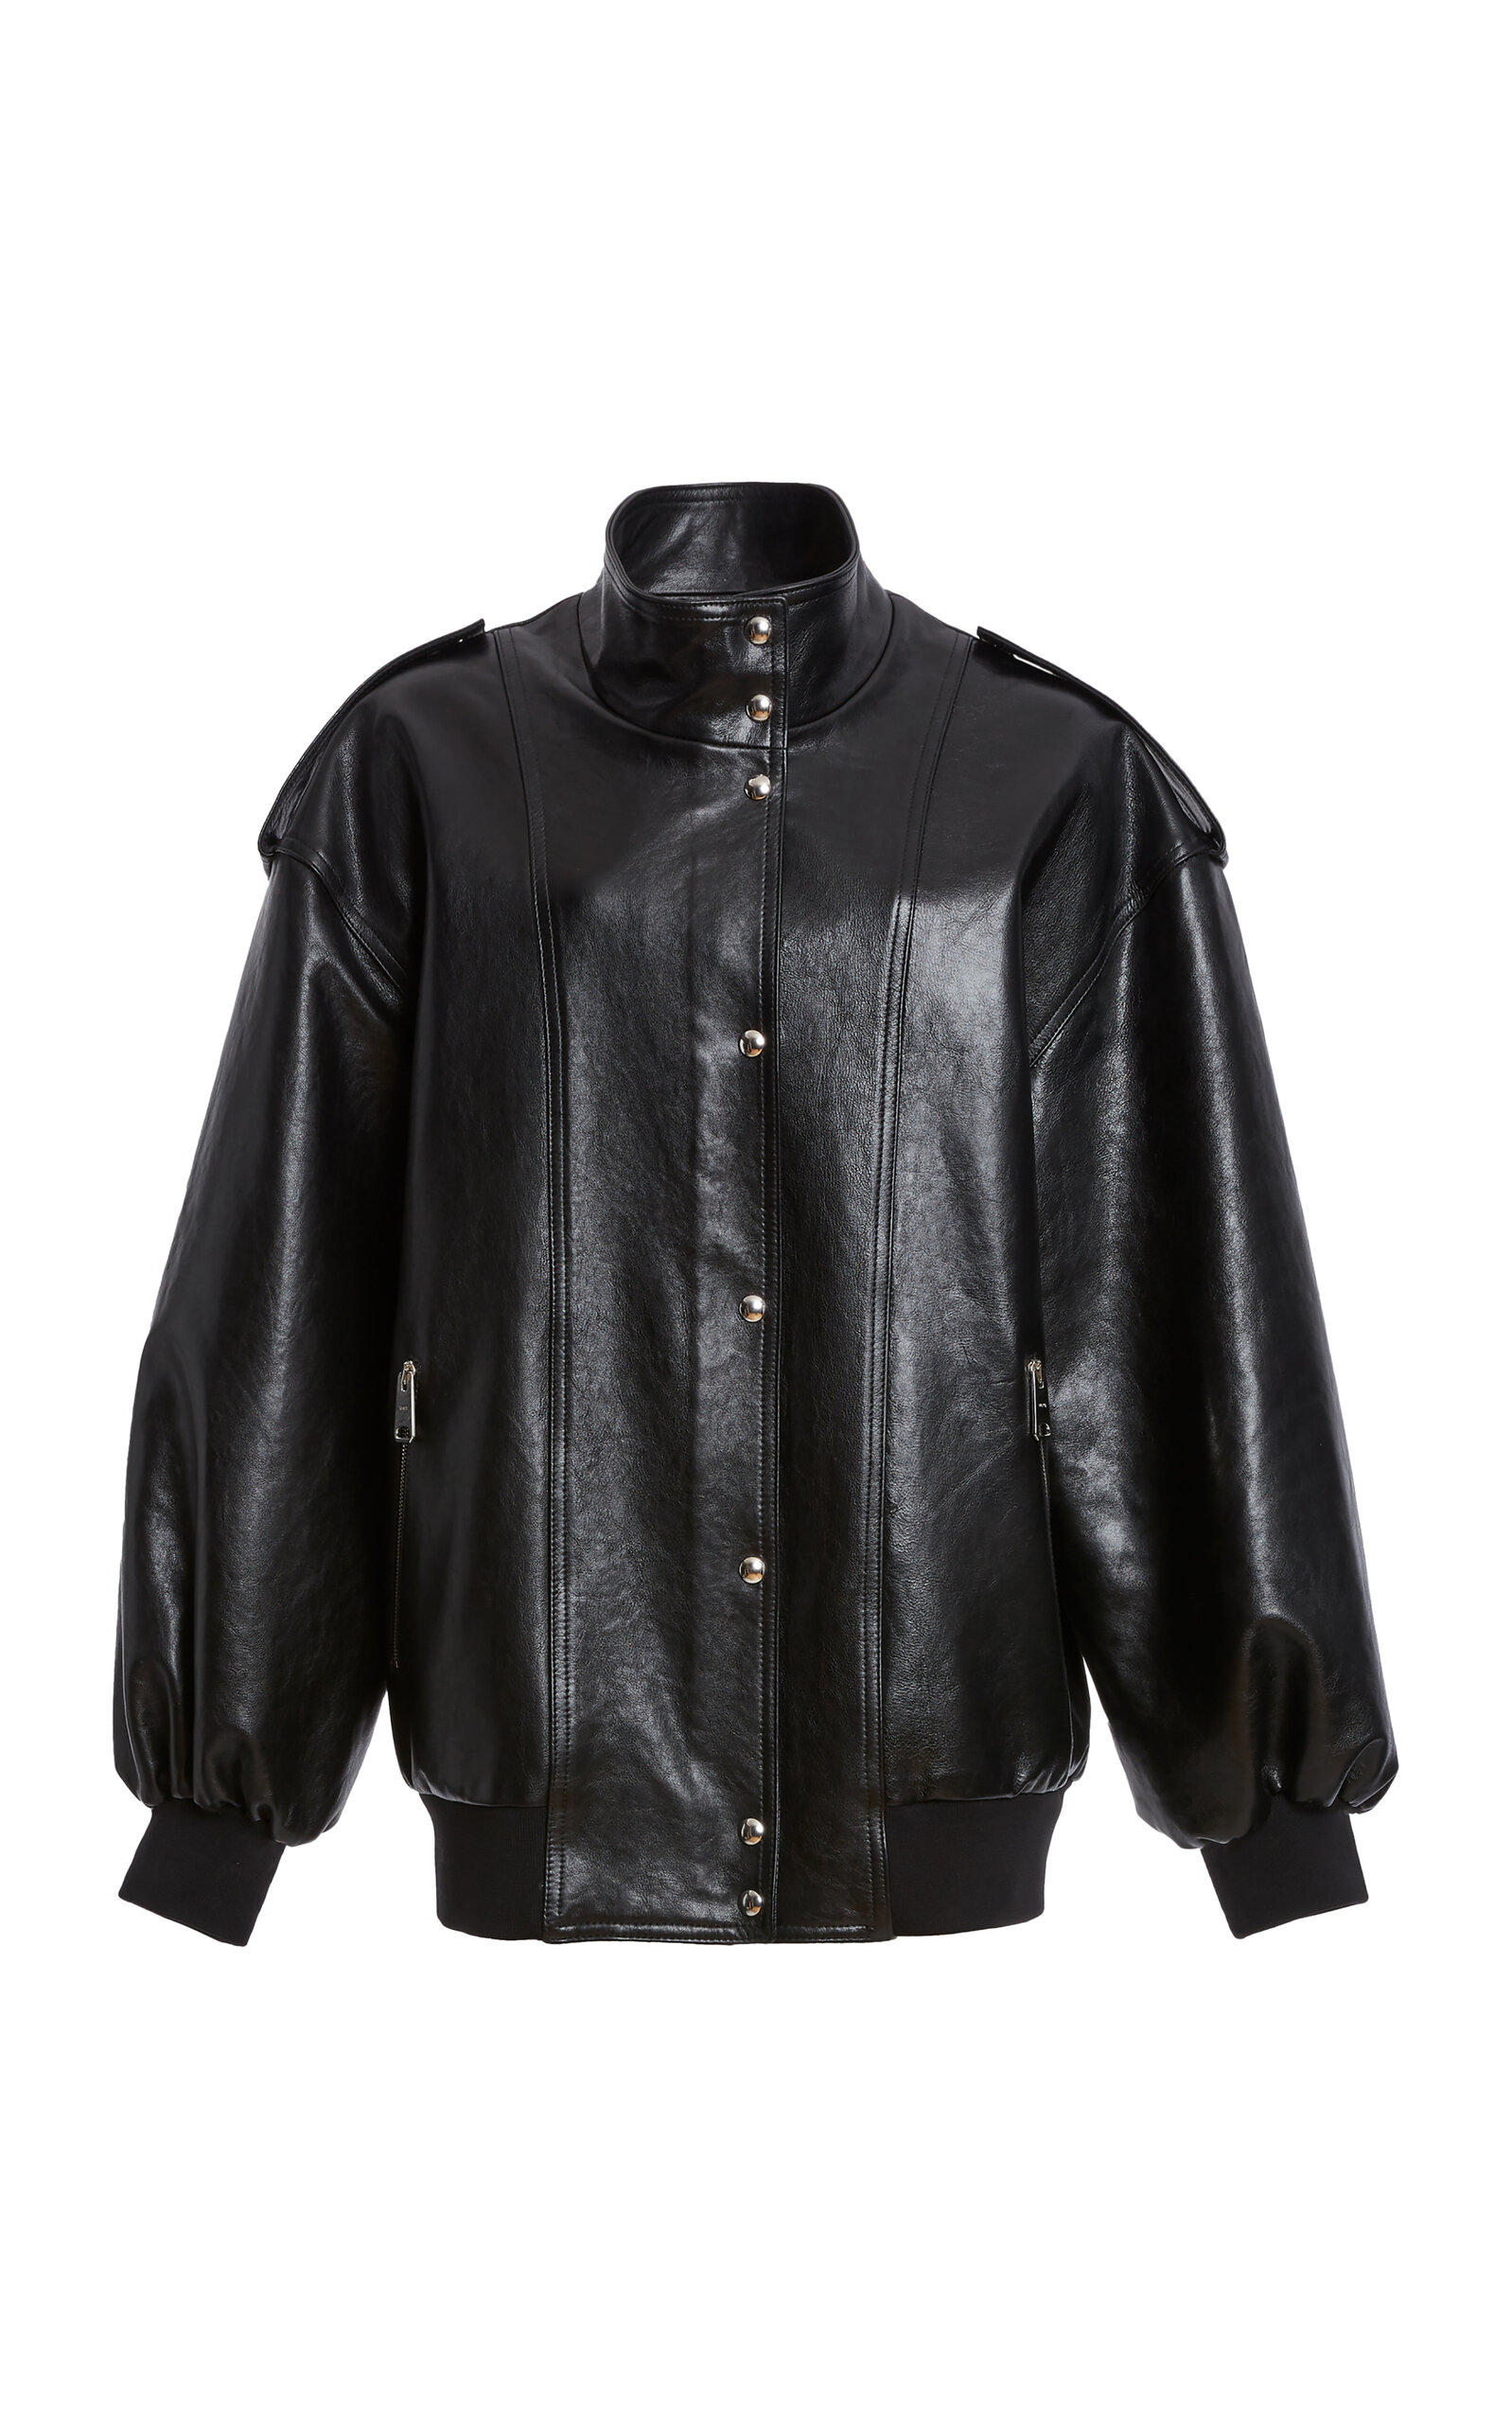 Khaite - Farris Leather Jacket - Black - US 0 - Moda Operandi